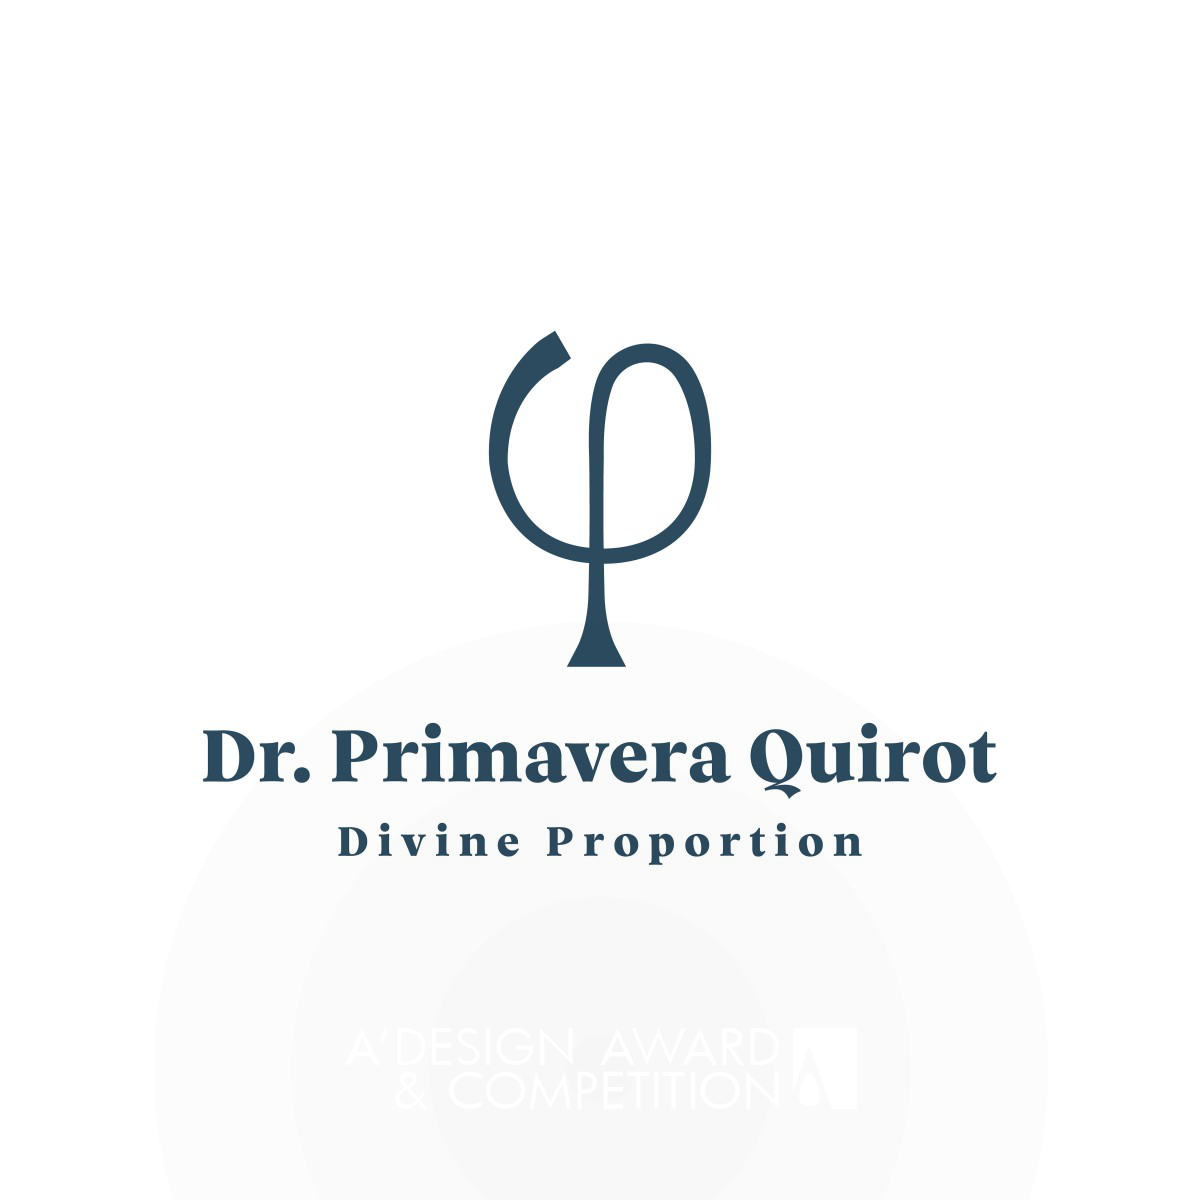 Dr Primavera Quirot  Visual Identity  by Jonathan Ramirez